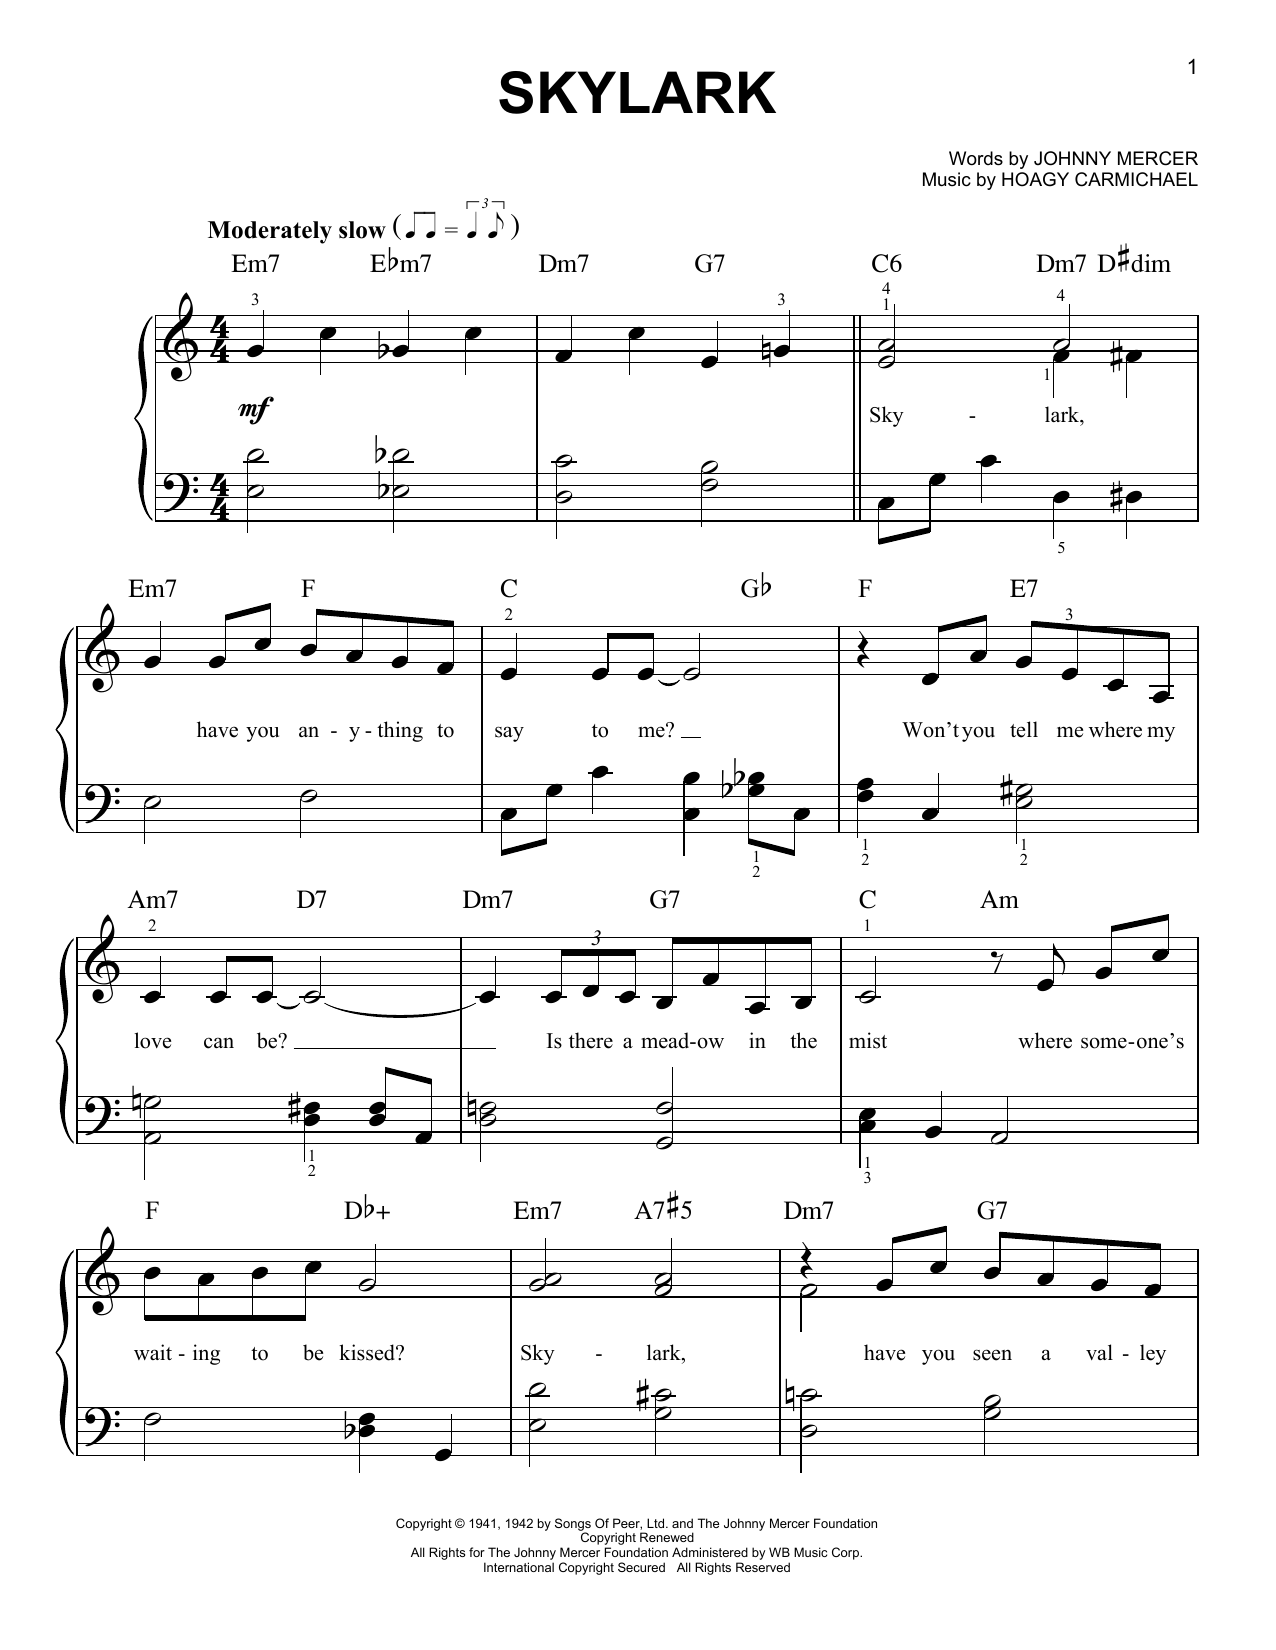 Hoagy Carmichael Skylark Sheet Music Notes & Chords for Violin - Download or Print PDF